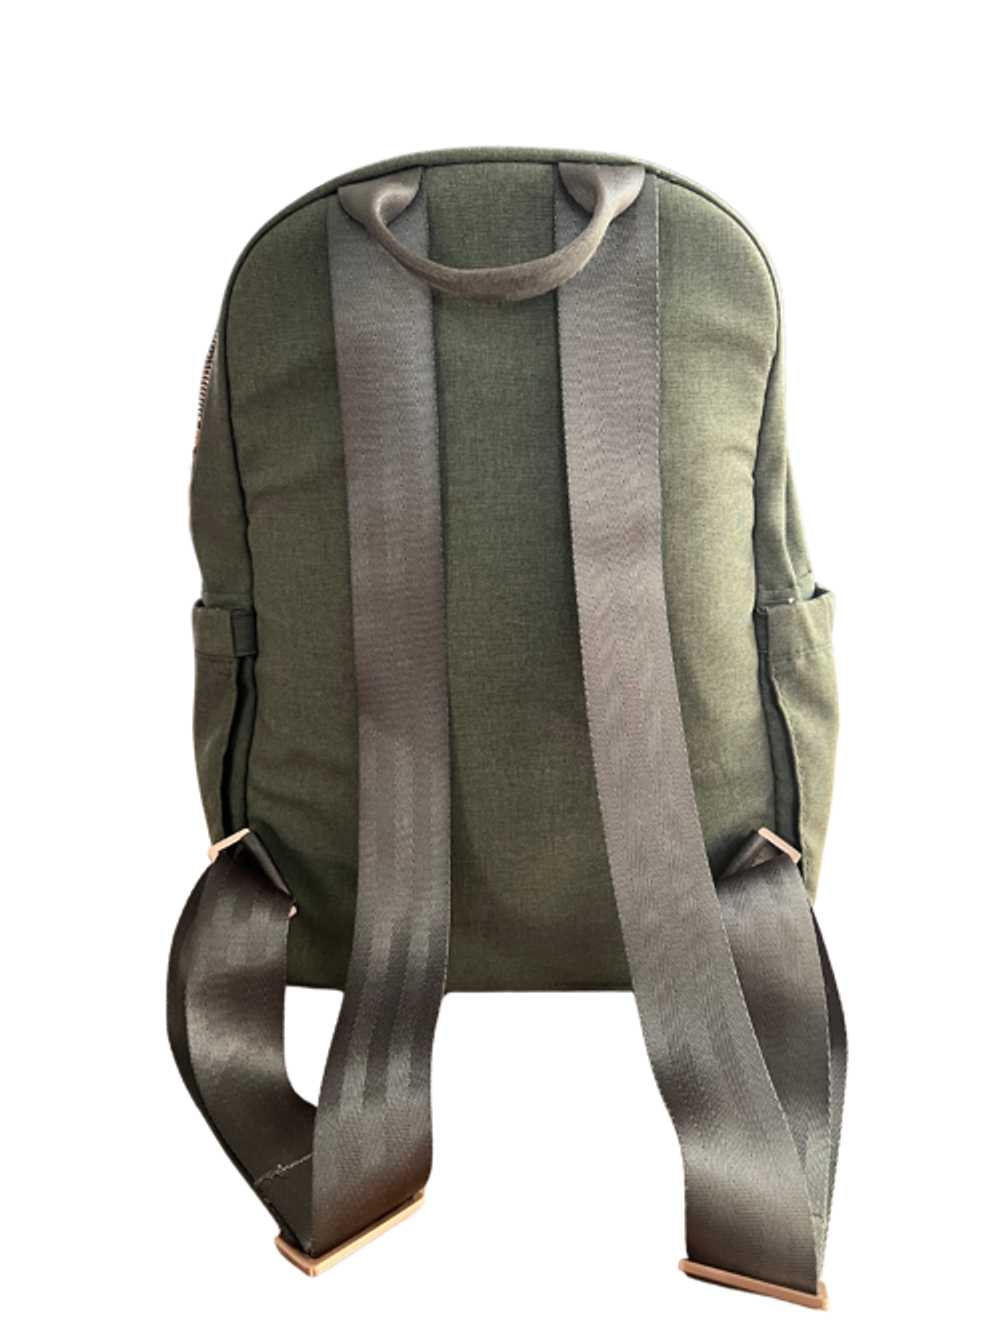 JuJuBe Midi Backpack - Olive Chromatics - image 7